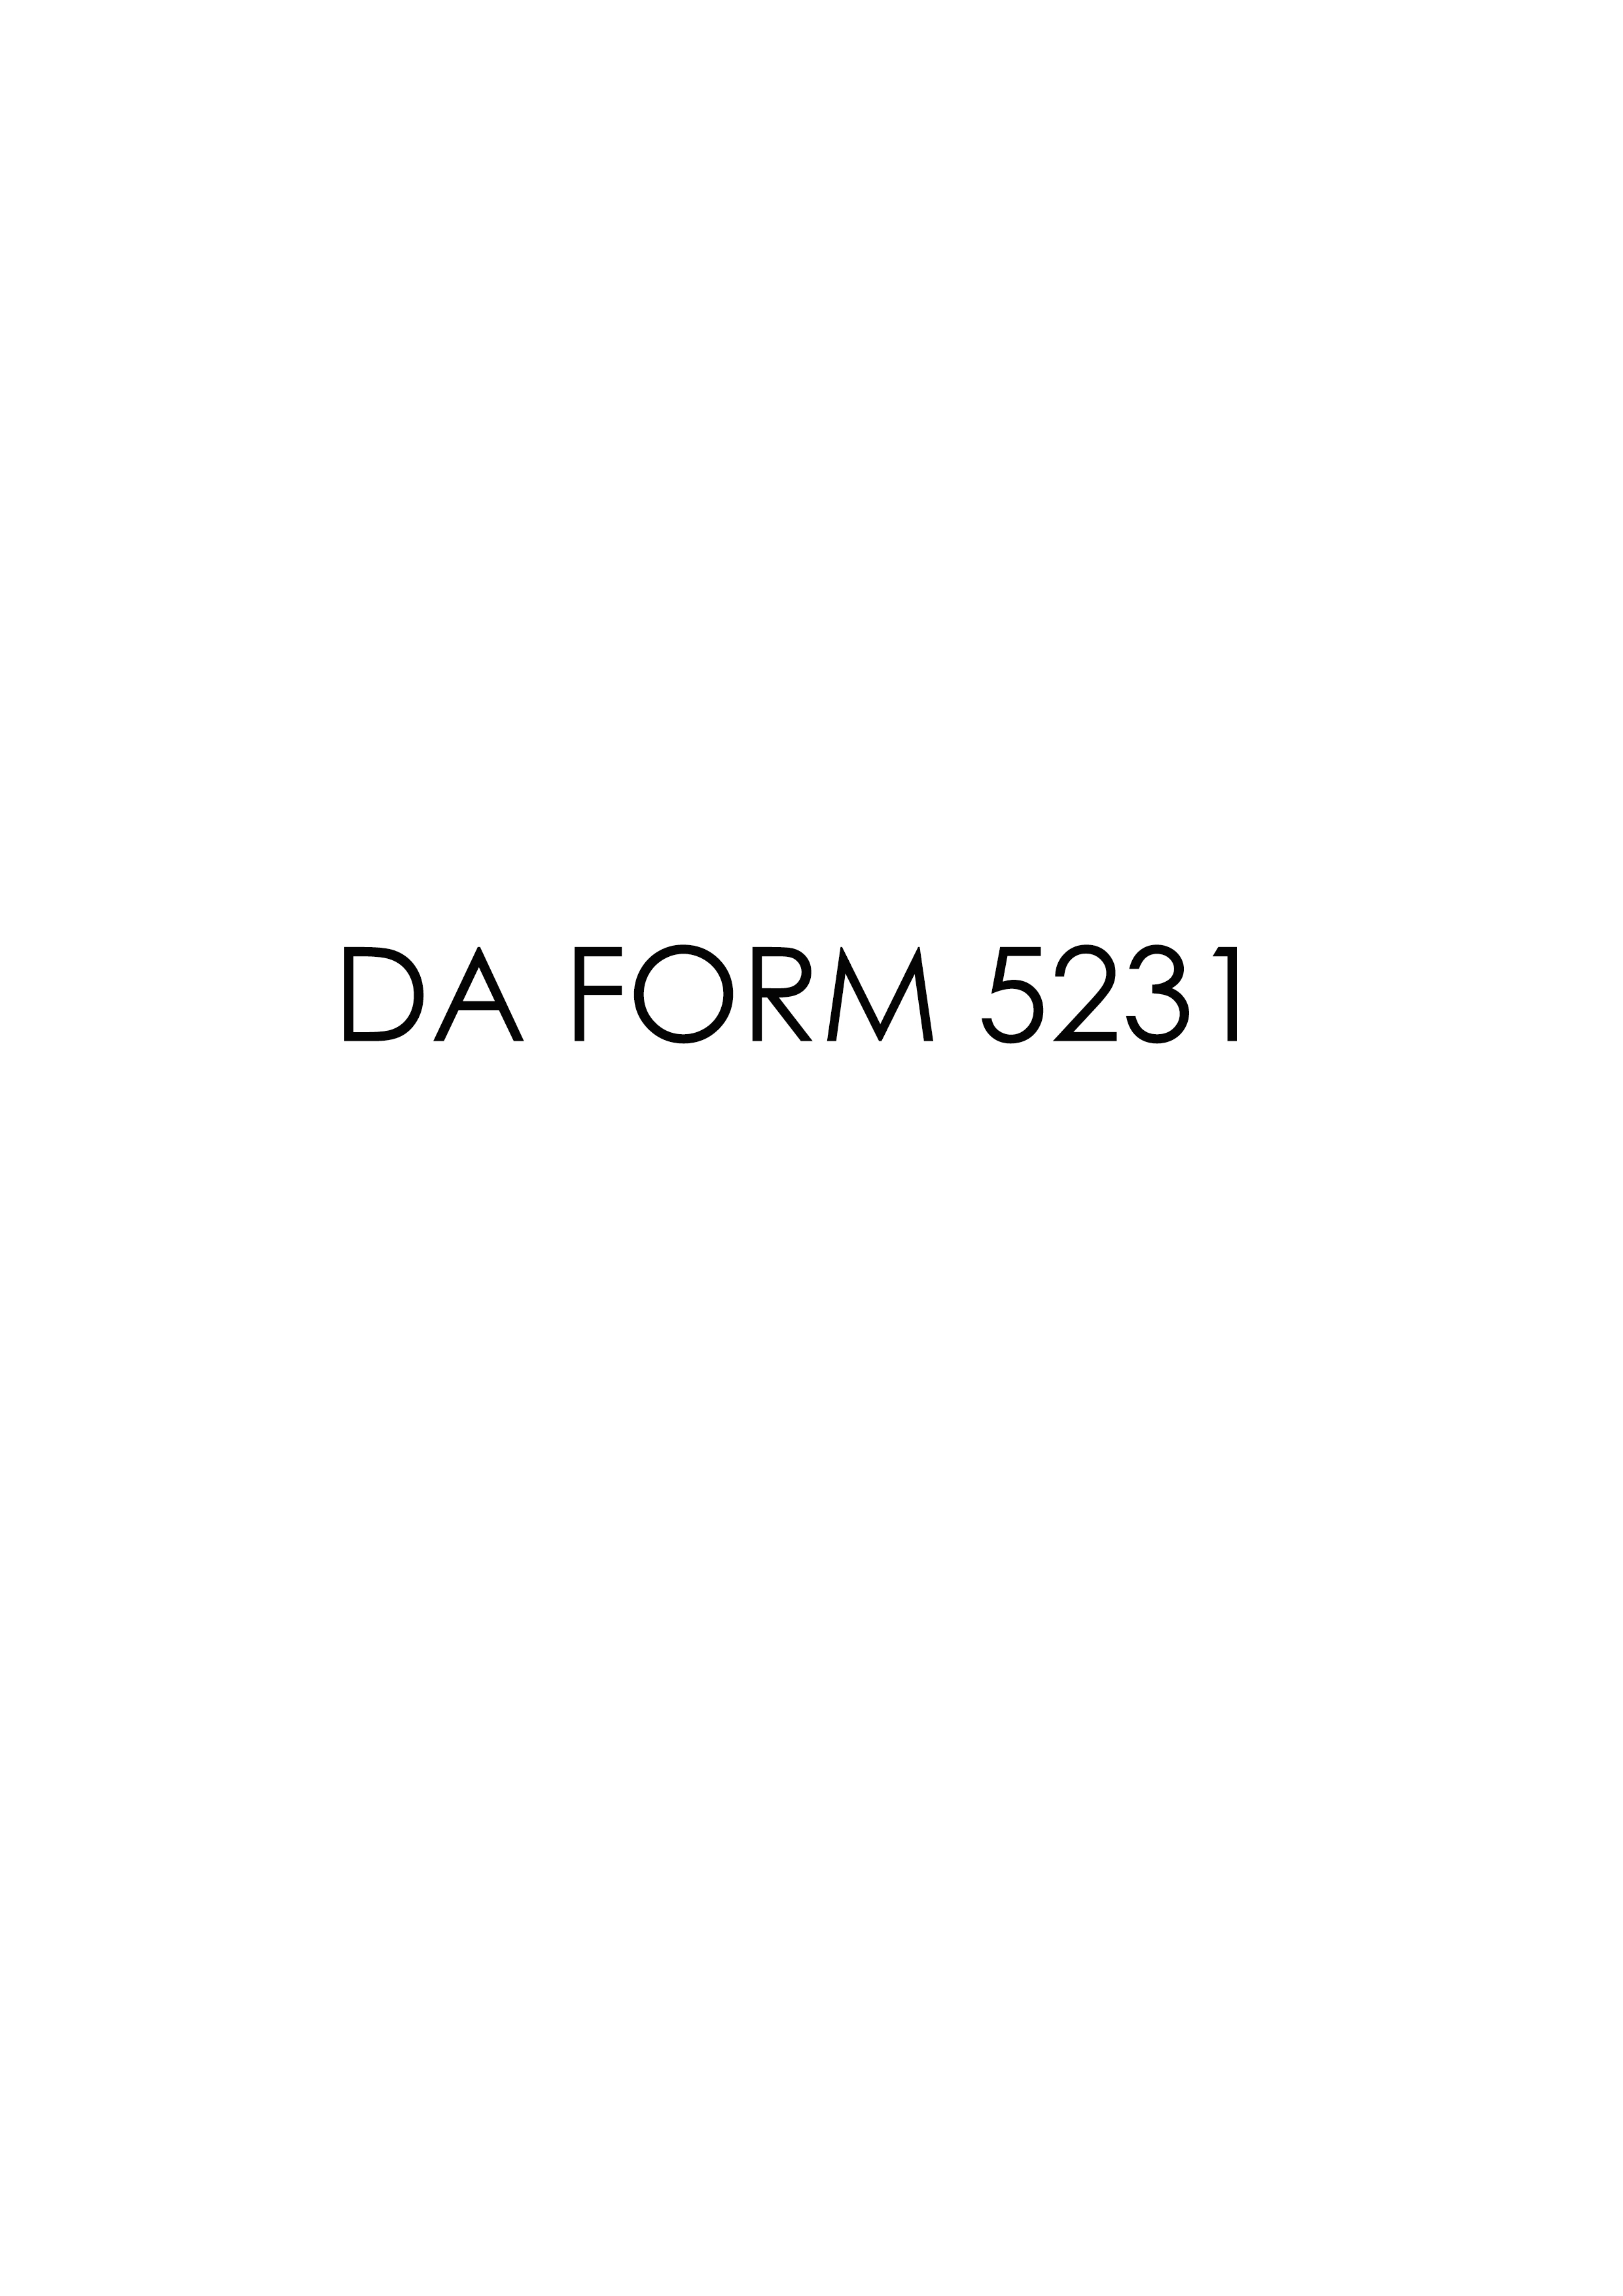 da Form 5231 fillable